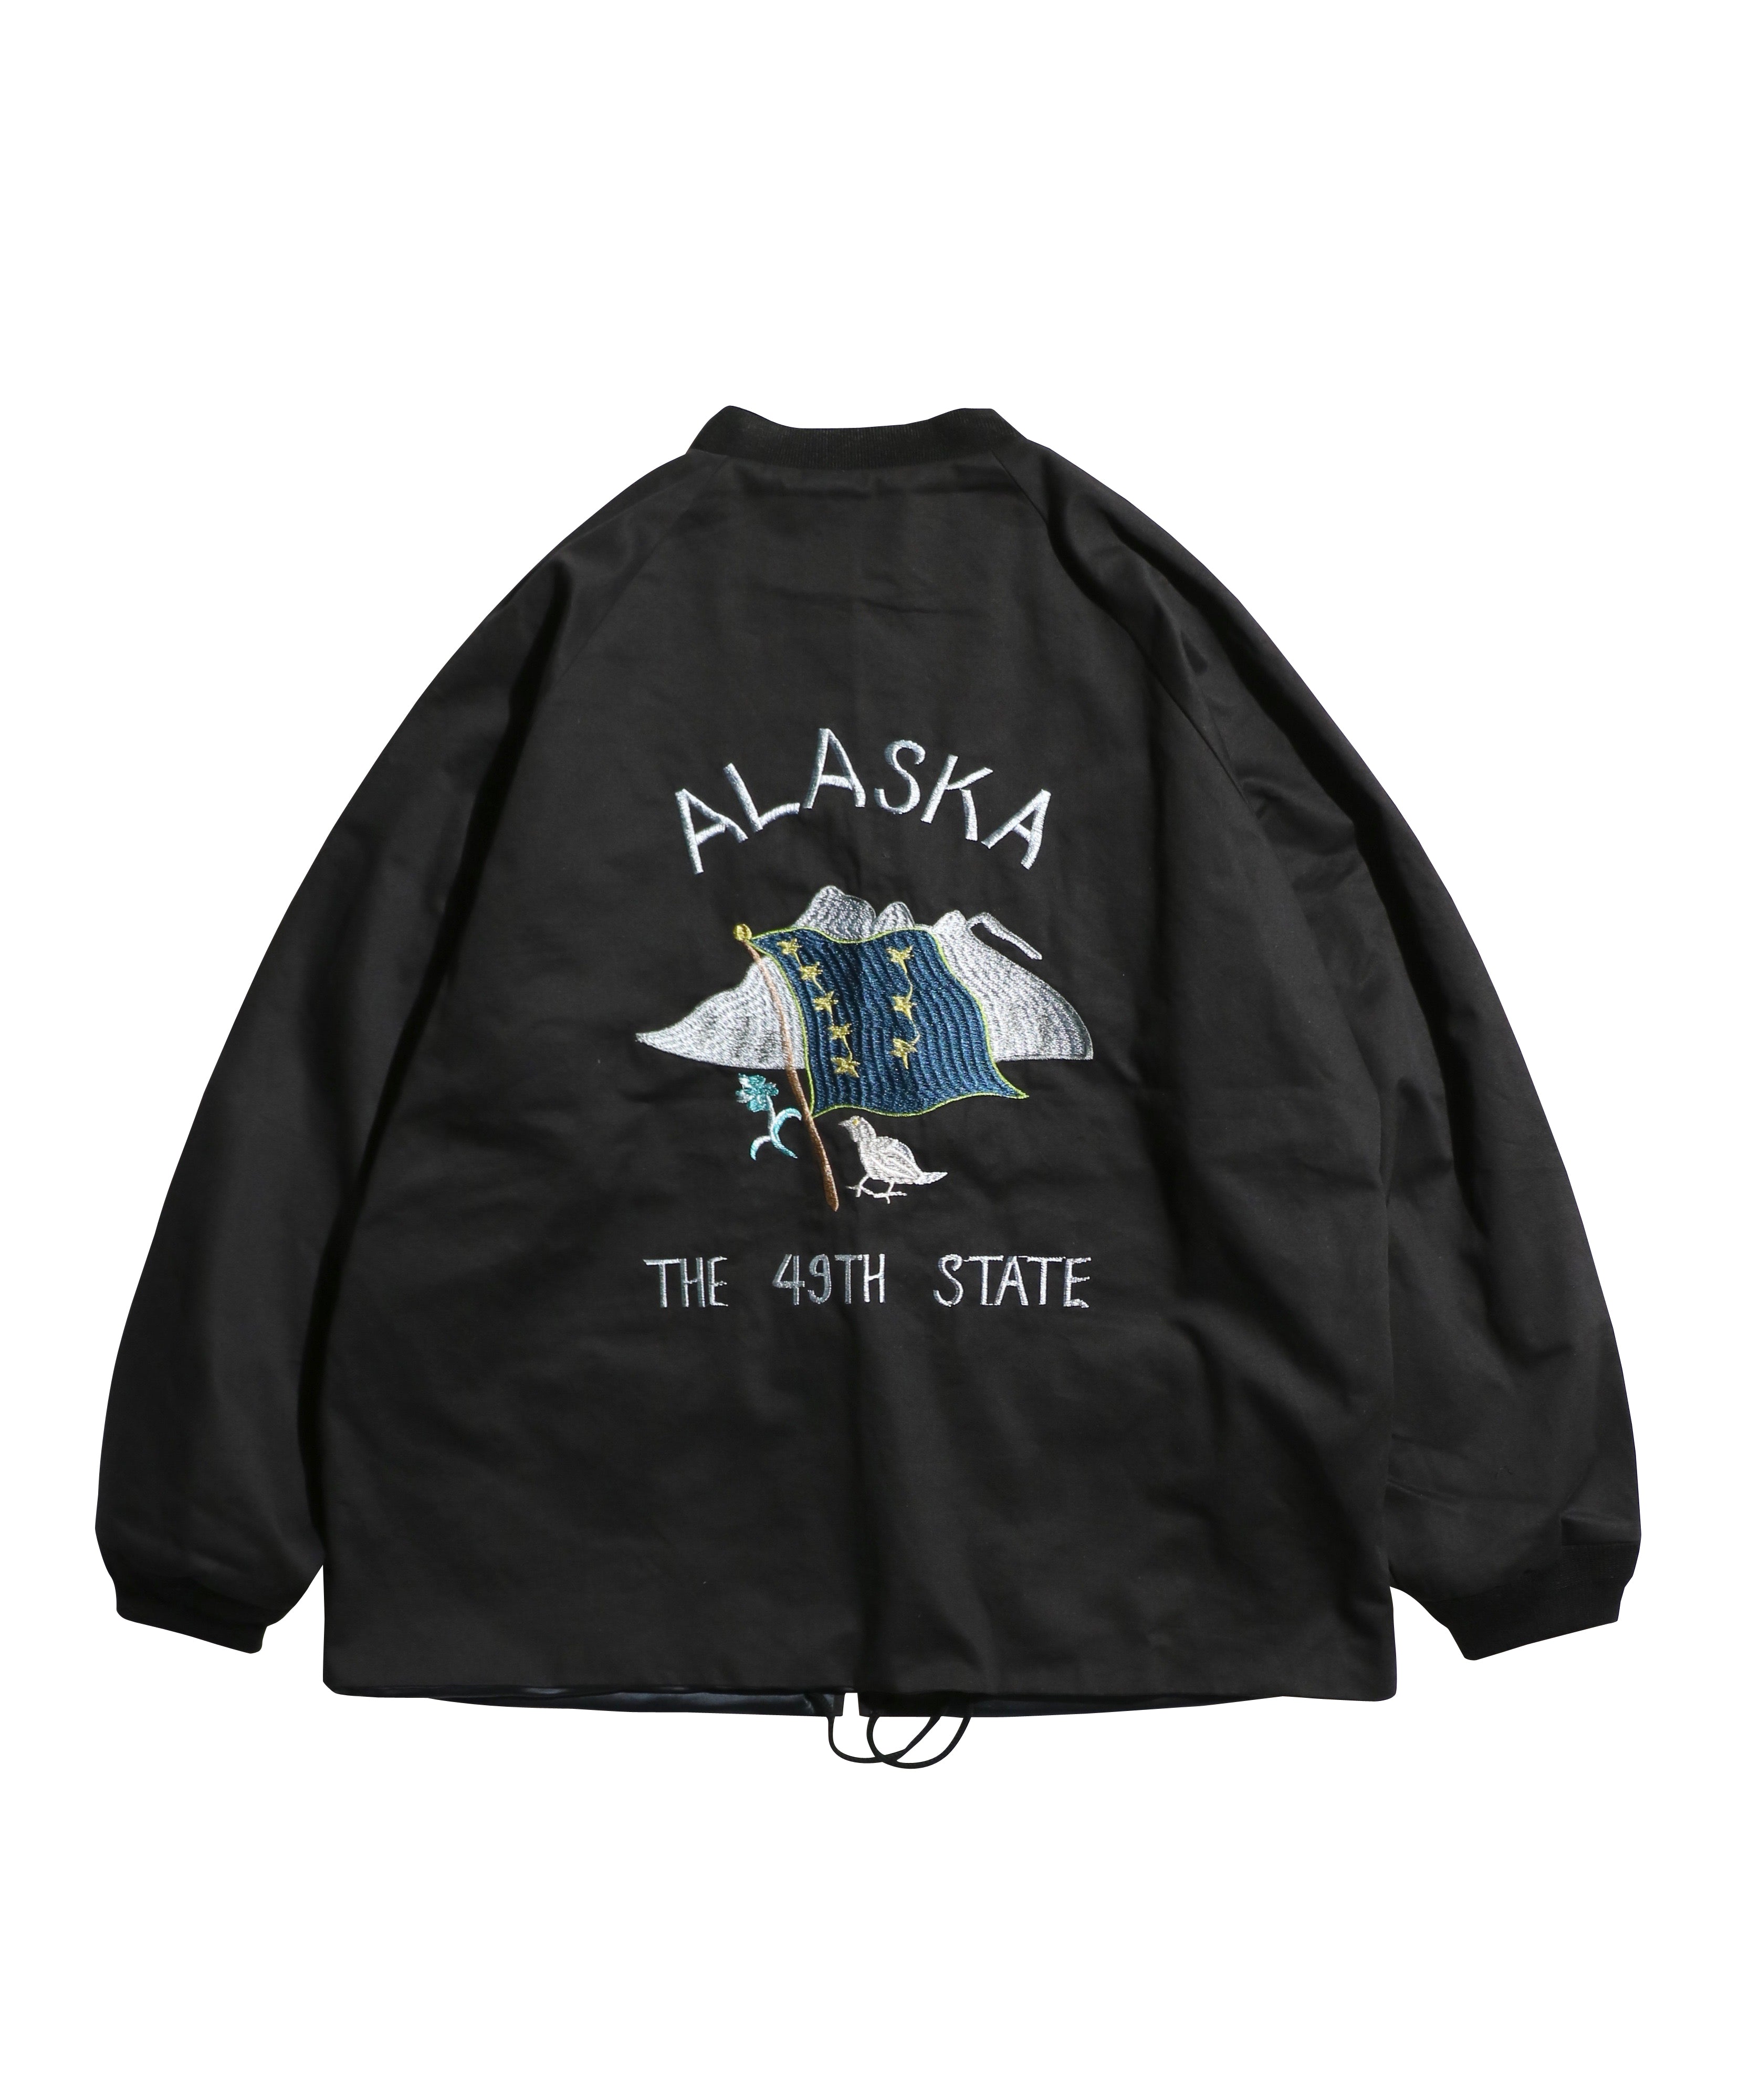 No:tl24s001 | Name:souver alaska jacket | Color:Black Sateen【THRIFTY LOOK_スリフティールック】